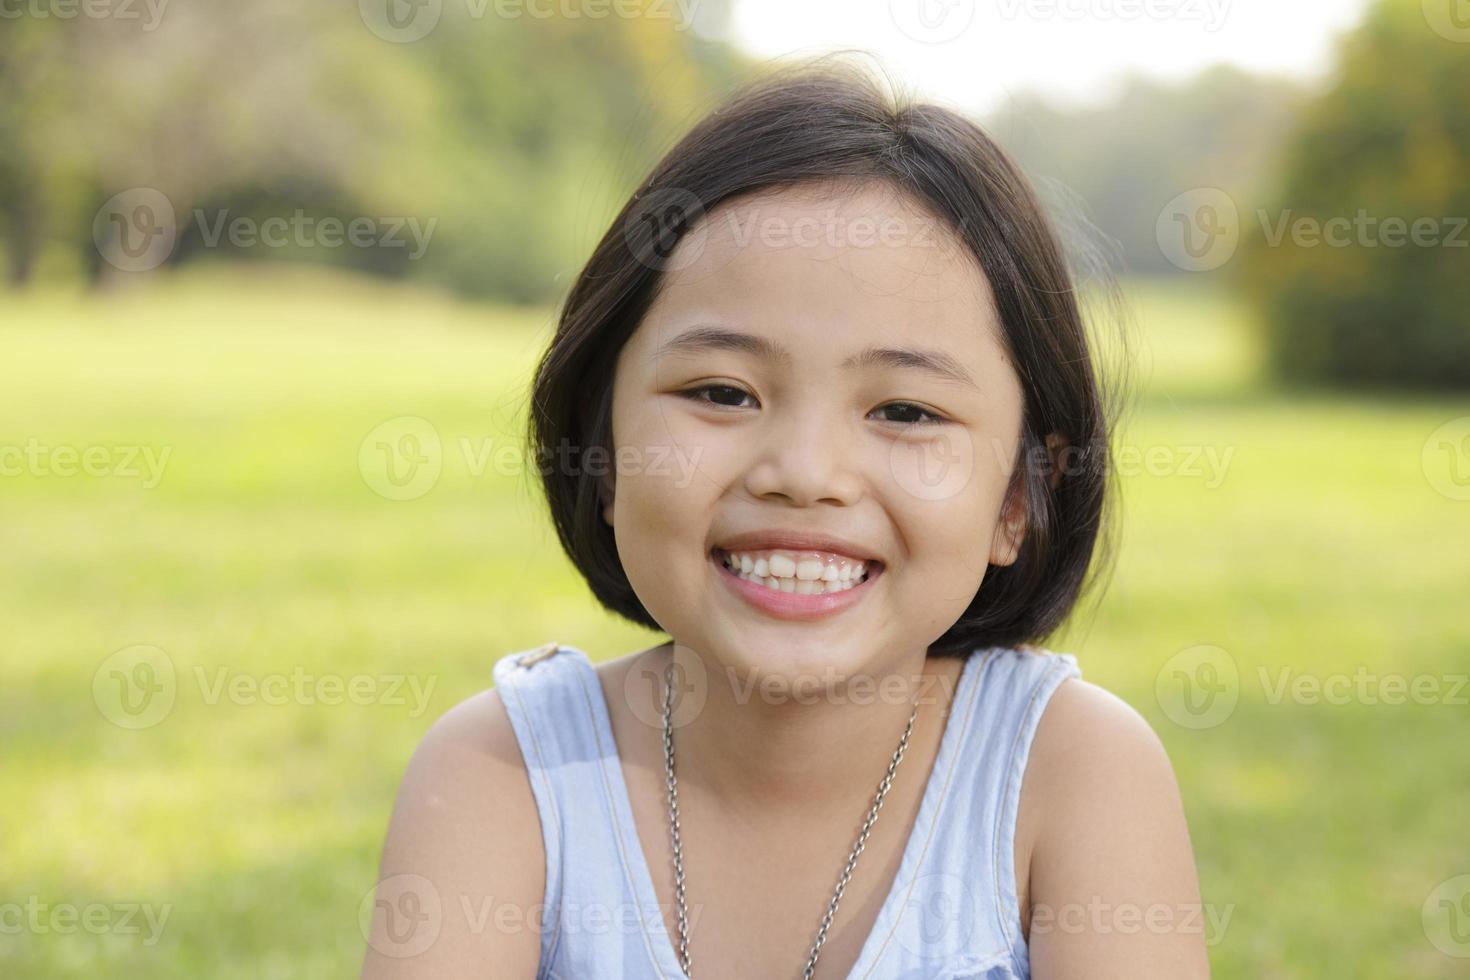 bambina asiatica che sorride felicemente nel parco foto